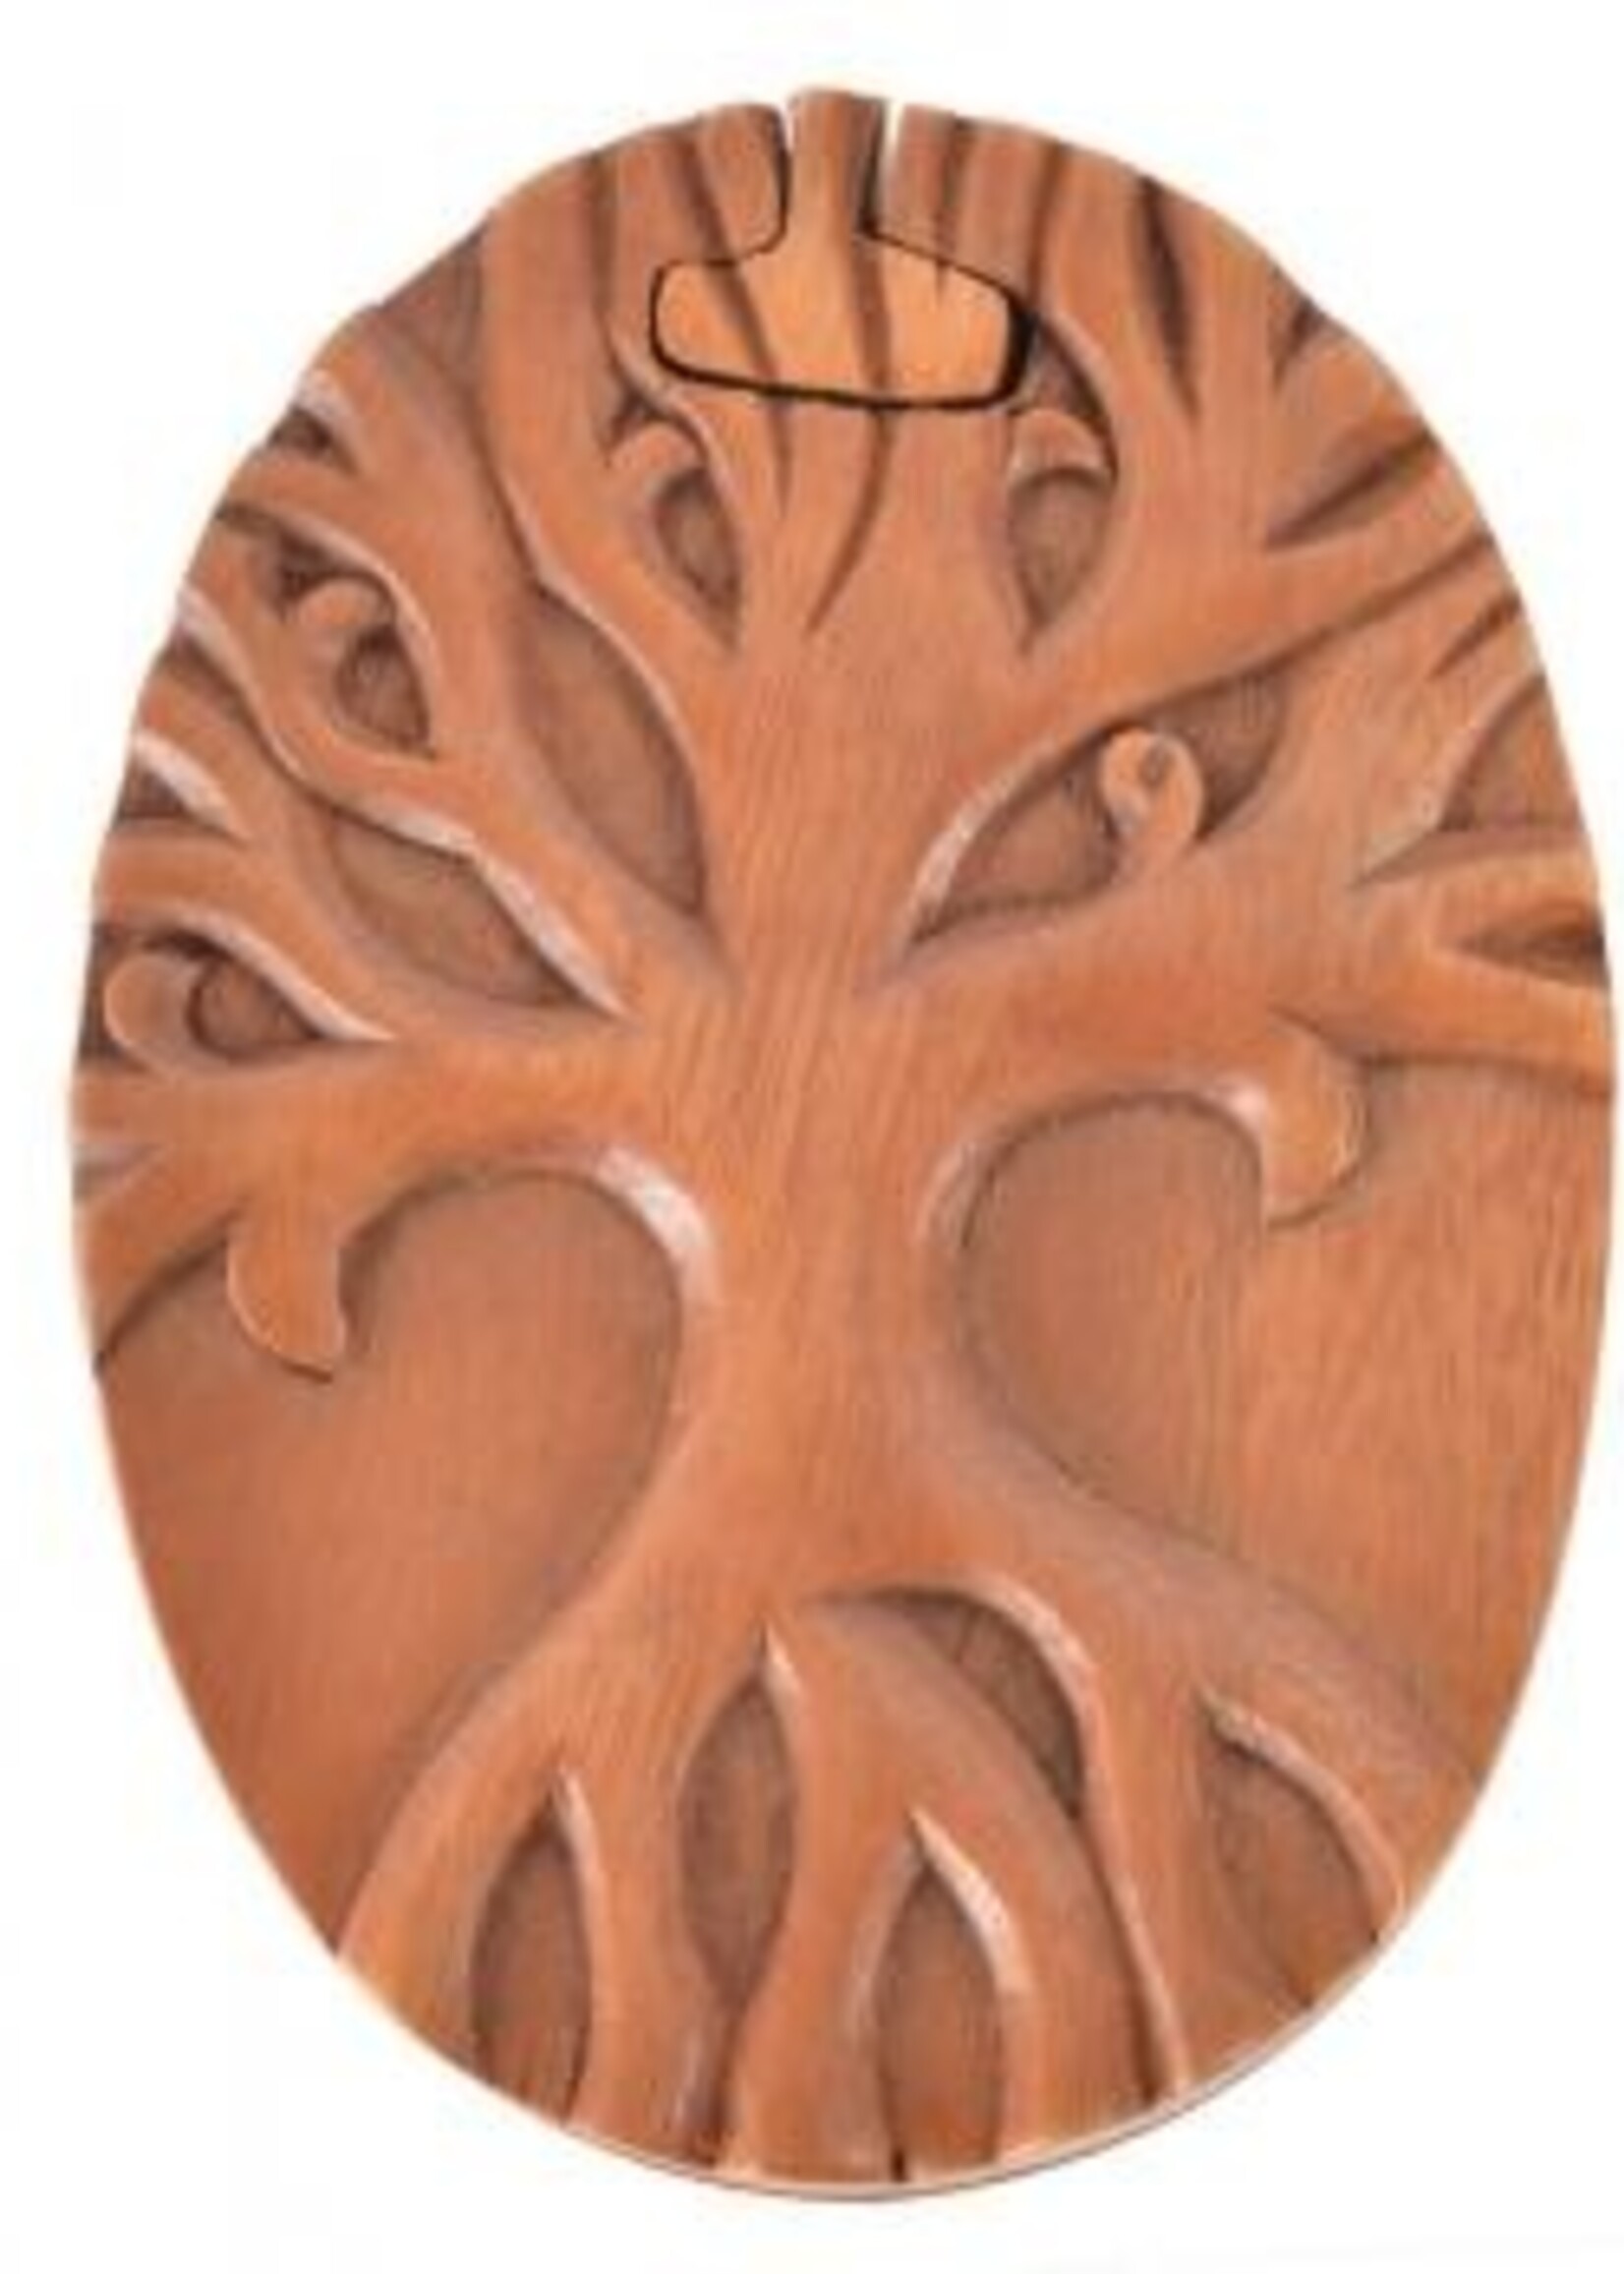 Benjamin International Wooden Tree of Life Puzzle Box